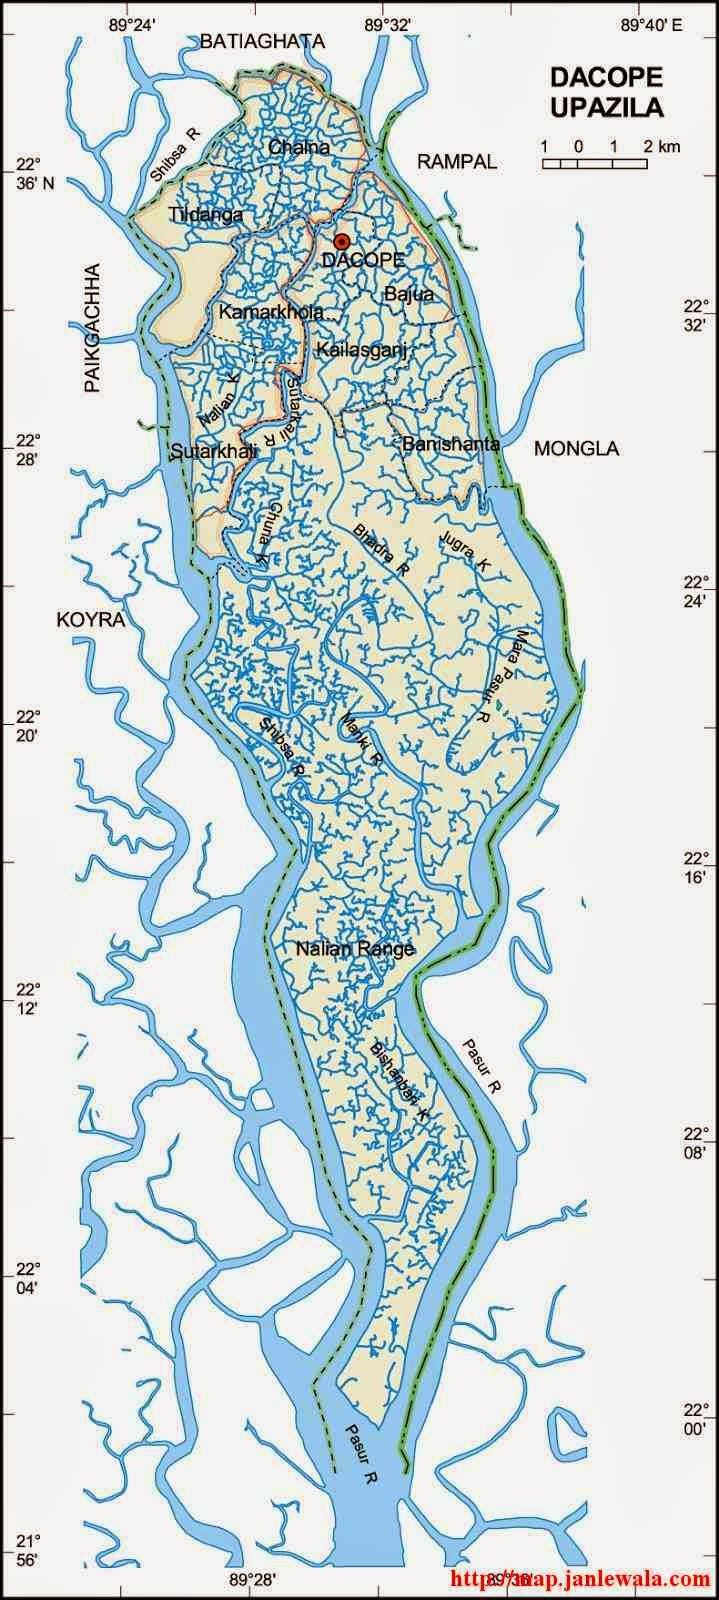 dacope upazila map of bangladesh